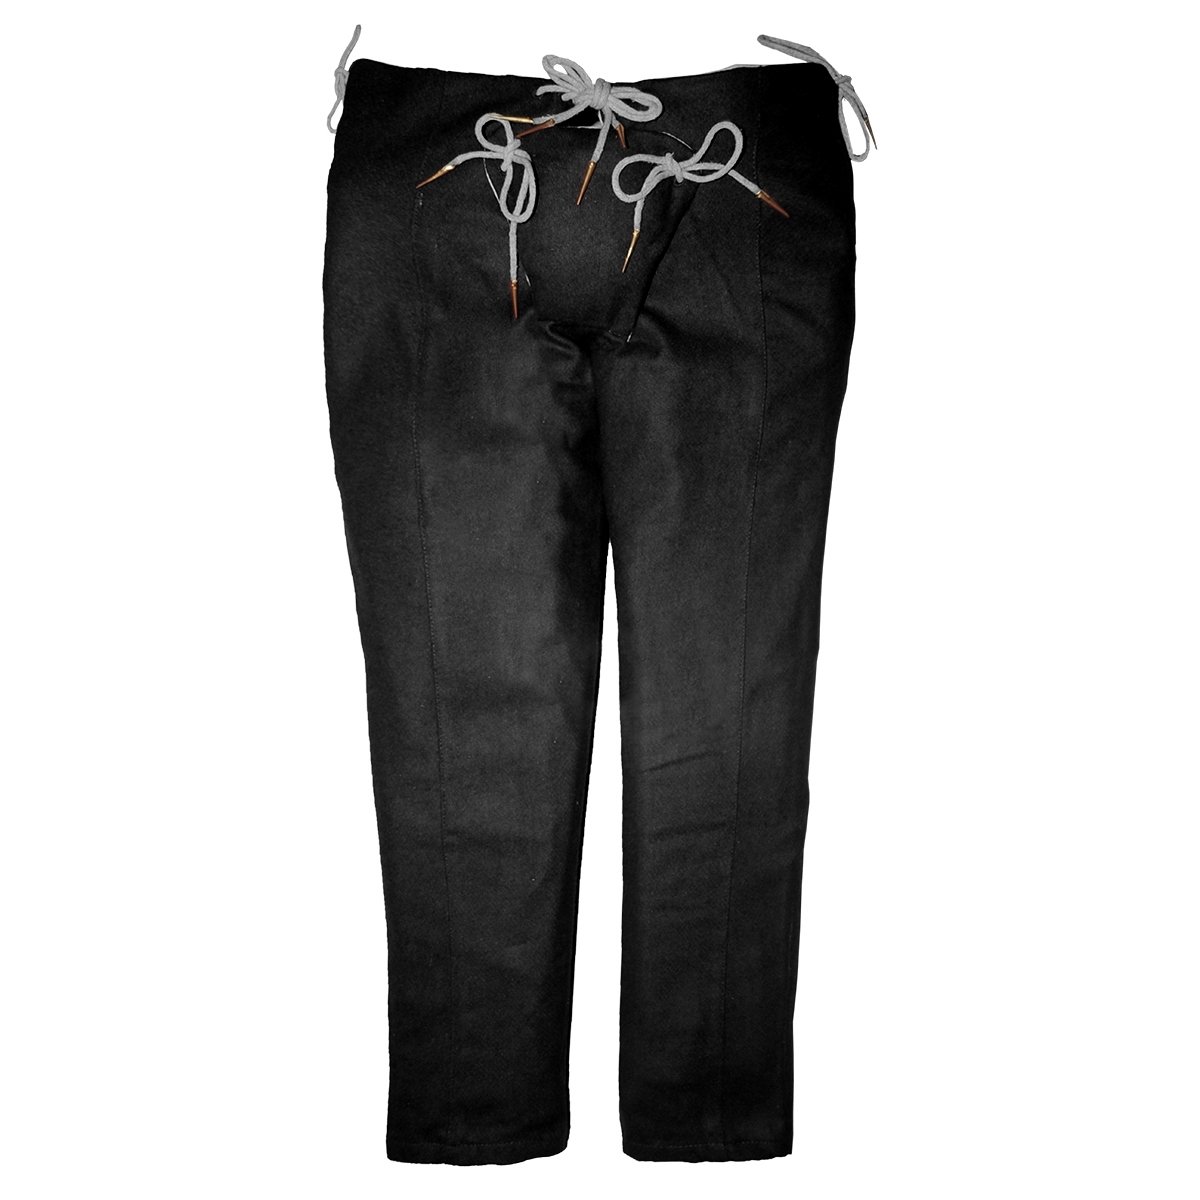 Man's 15th C. Trousers -Black, Size XXL